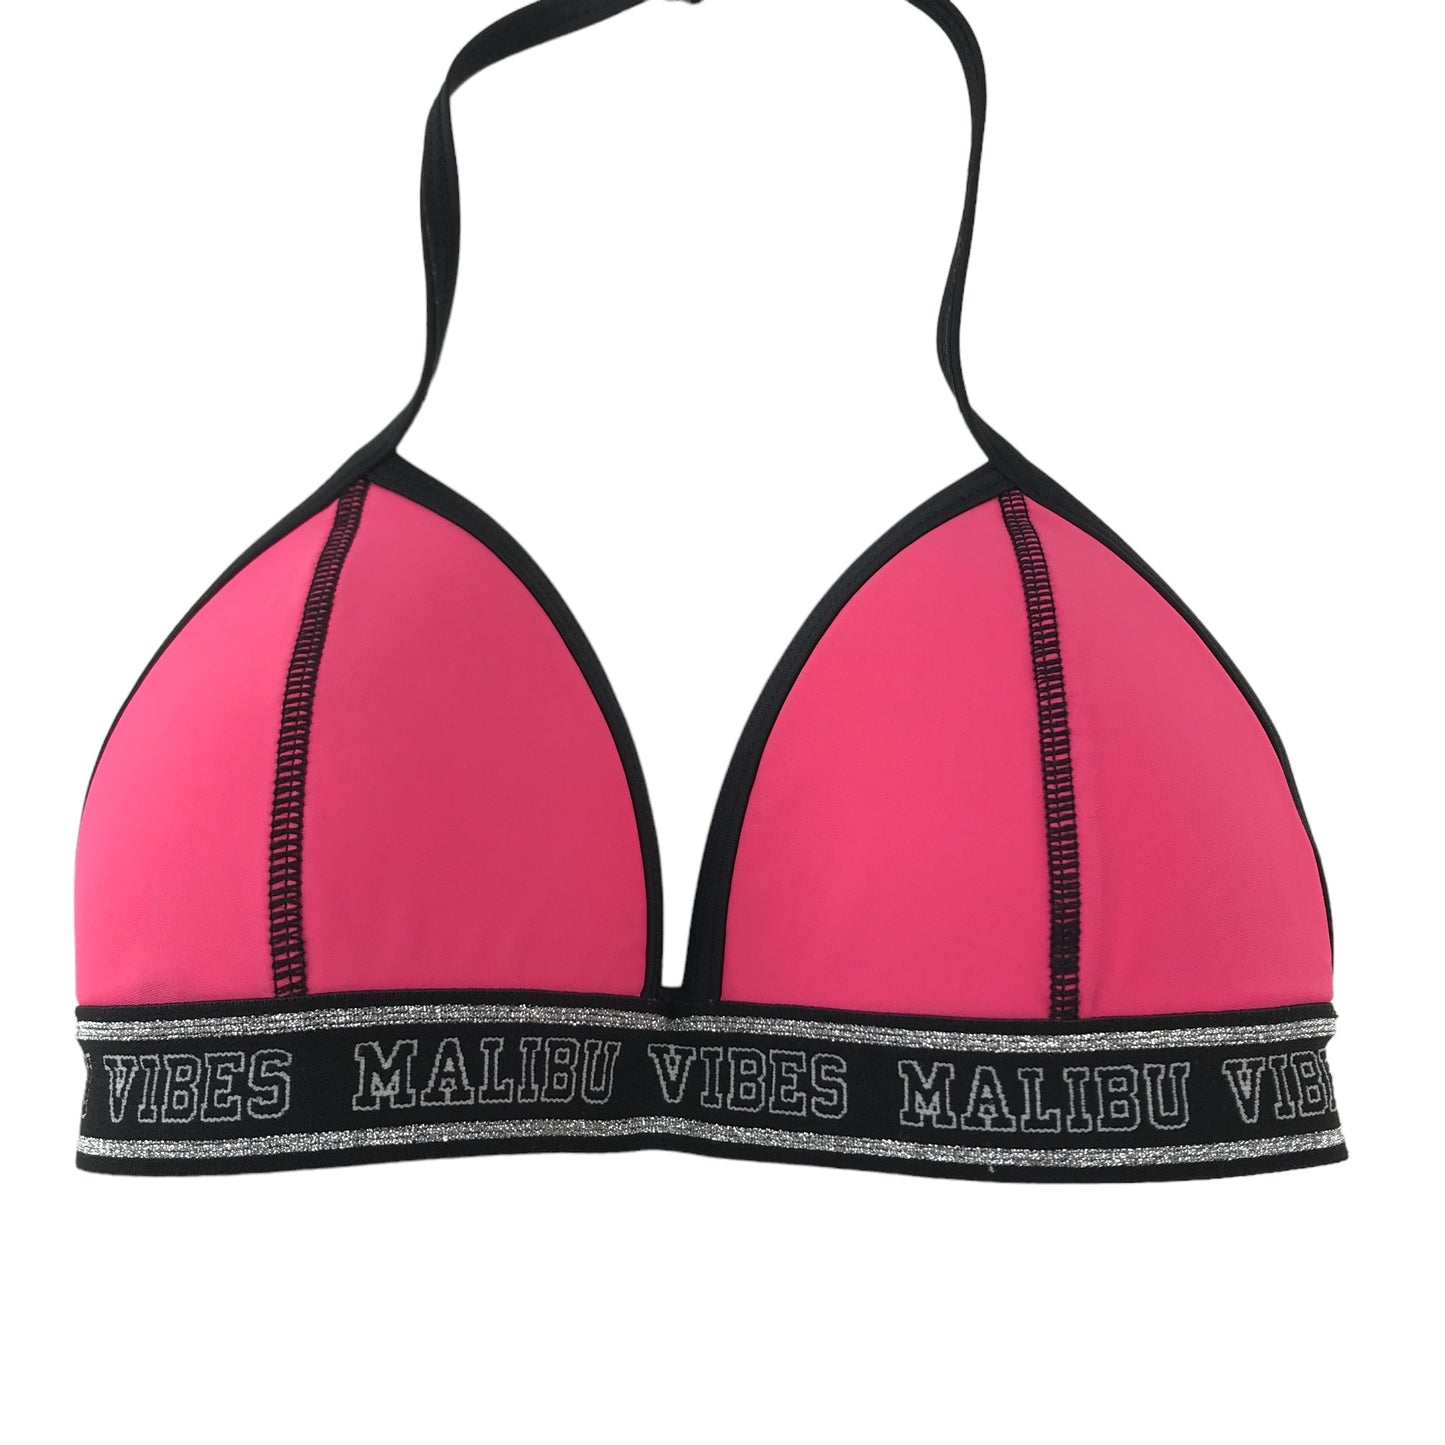 New Look Bikini Age 10 Pink Malibu Vibes 2-Piece Set